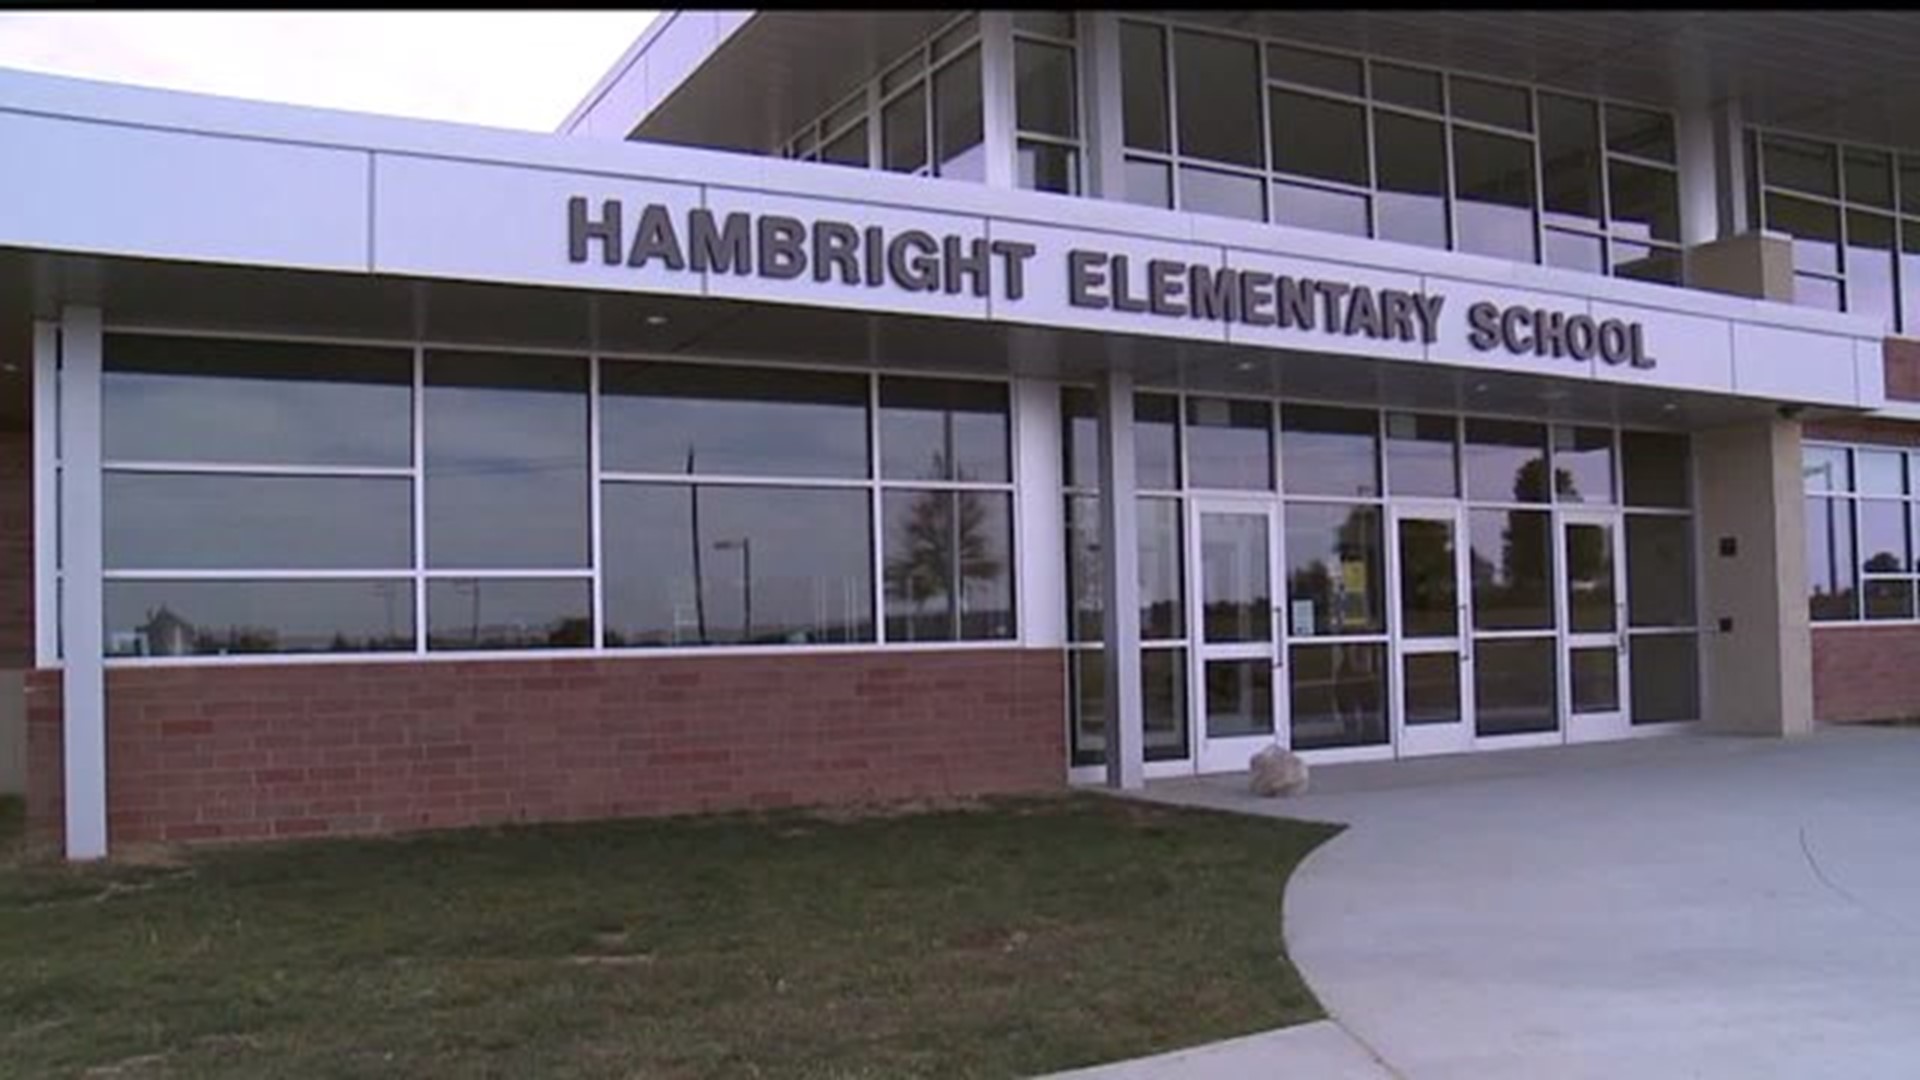 Hambright Elementary School Dedicated Today